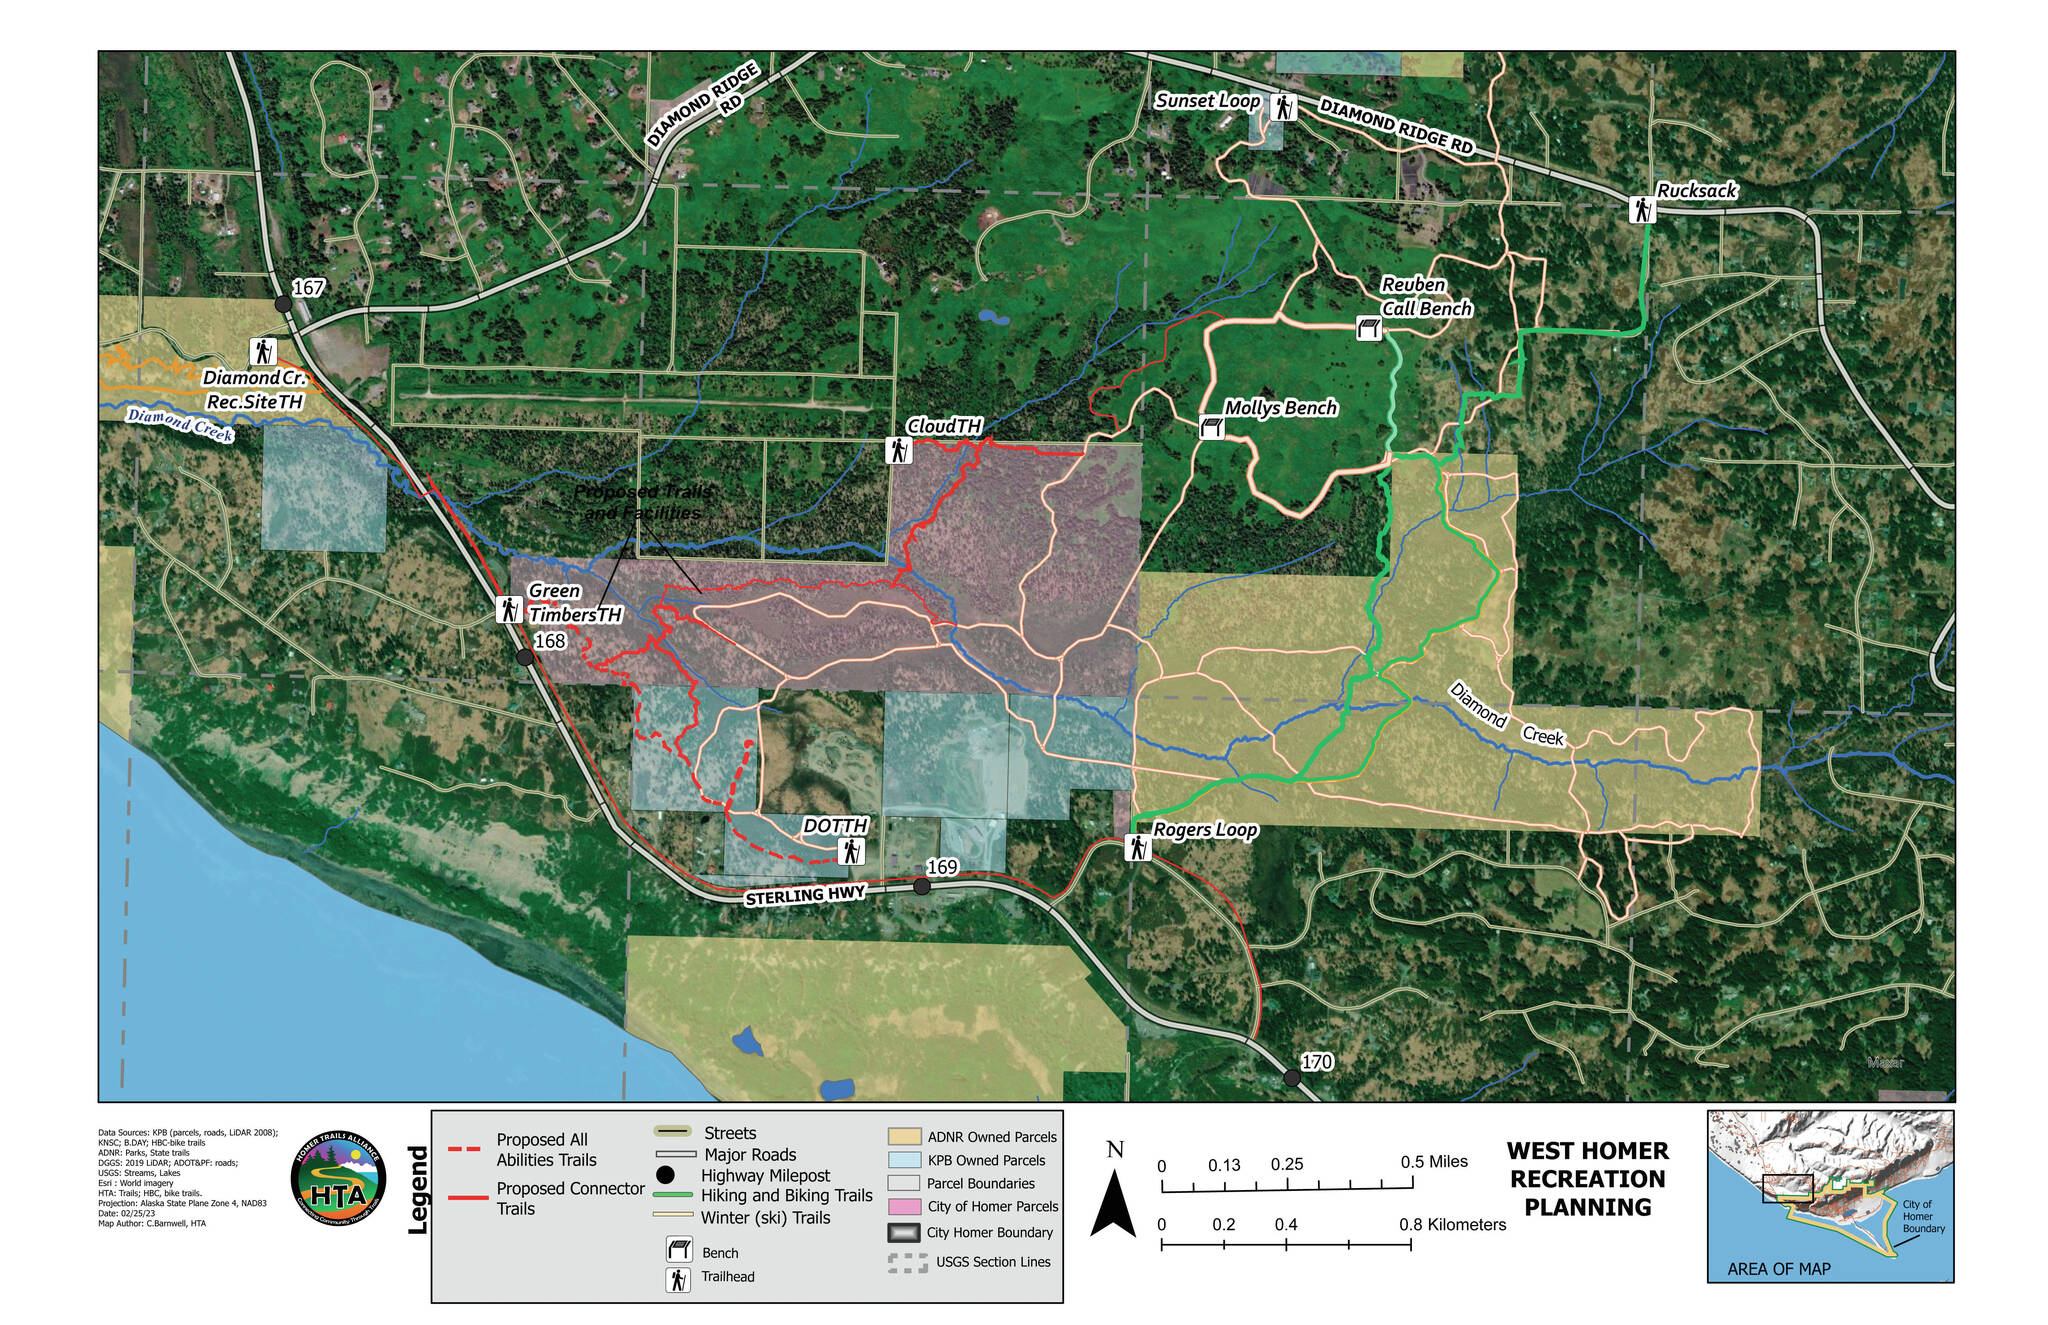 Diamond Creek Recreation Area Planning Map. (Provided by HTA)